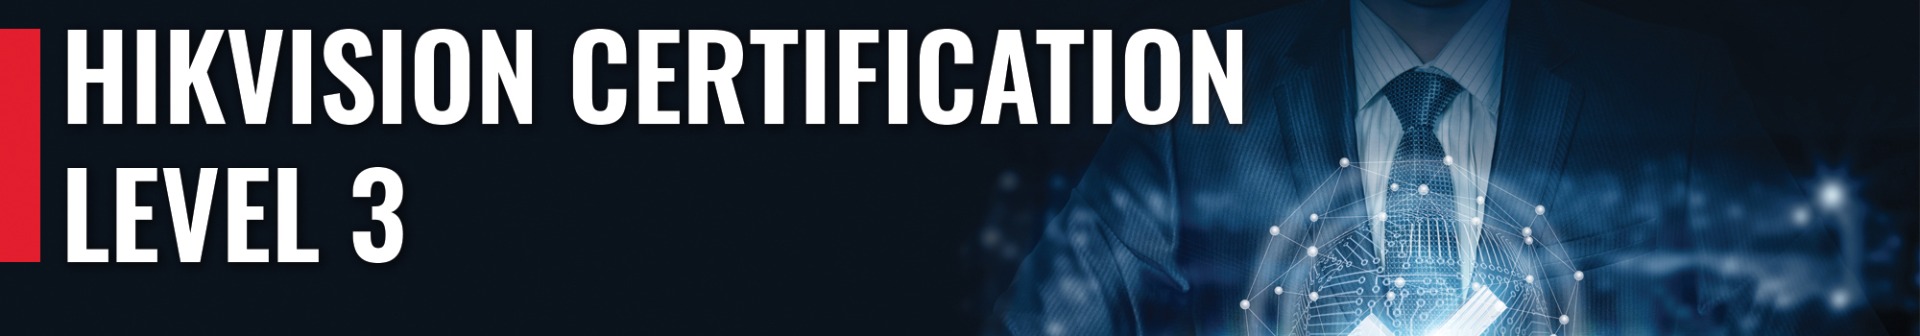 certification-level-3-banner